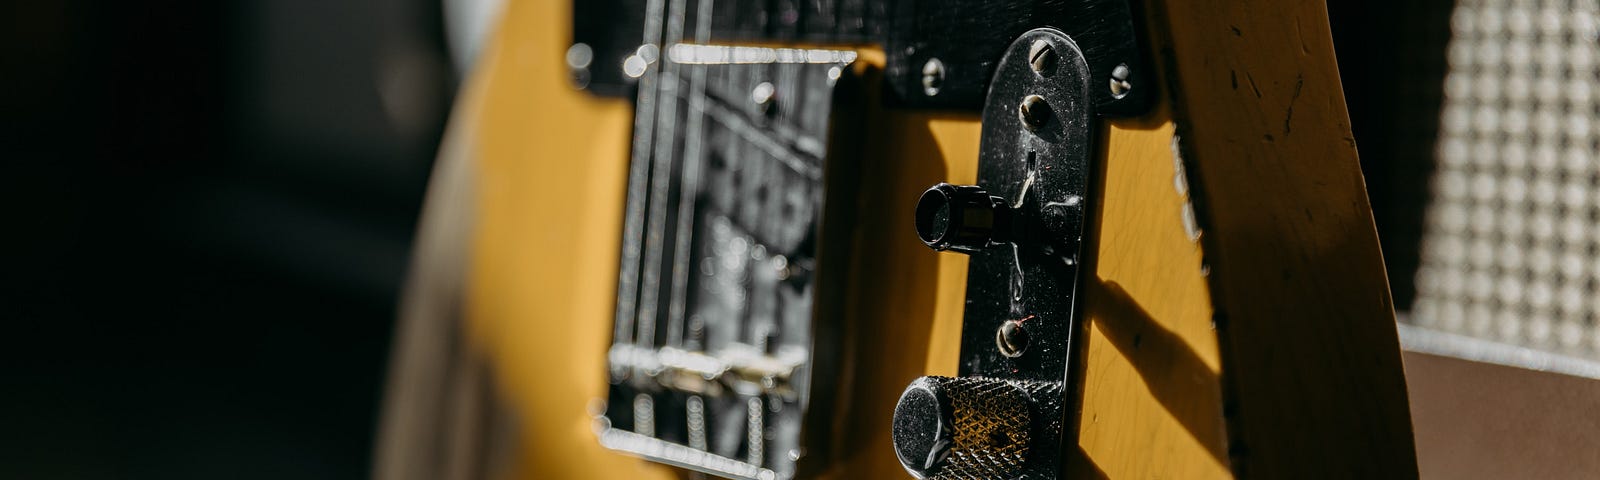 Closeup of telecaster guitar — looks like Springsteen’s